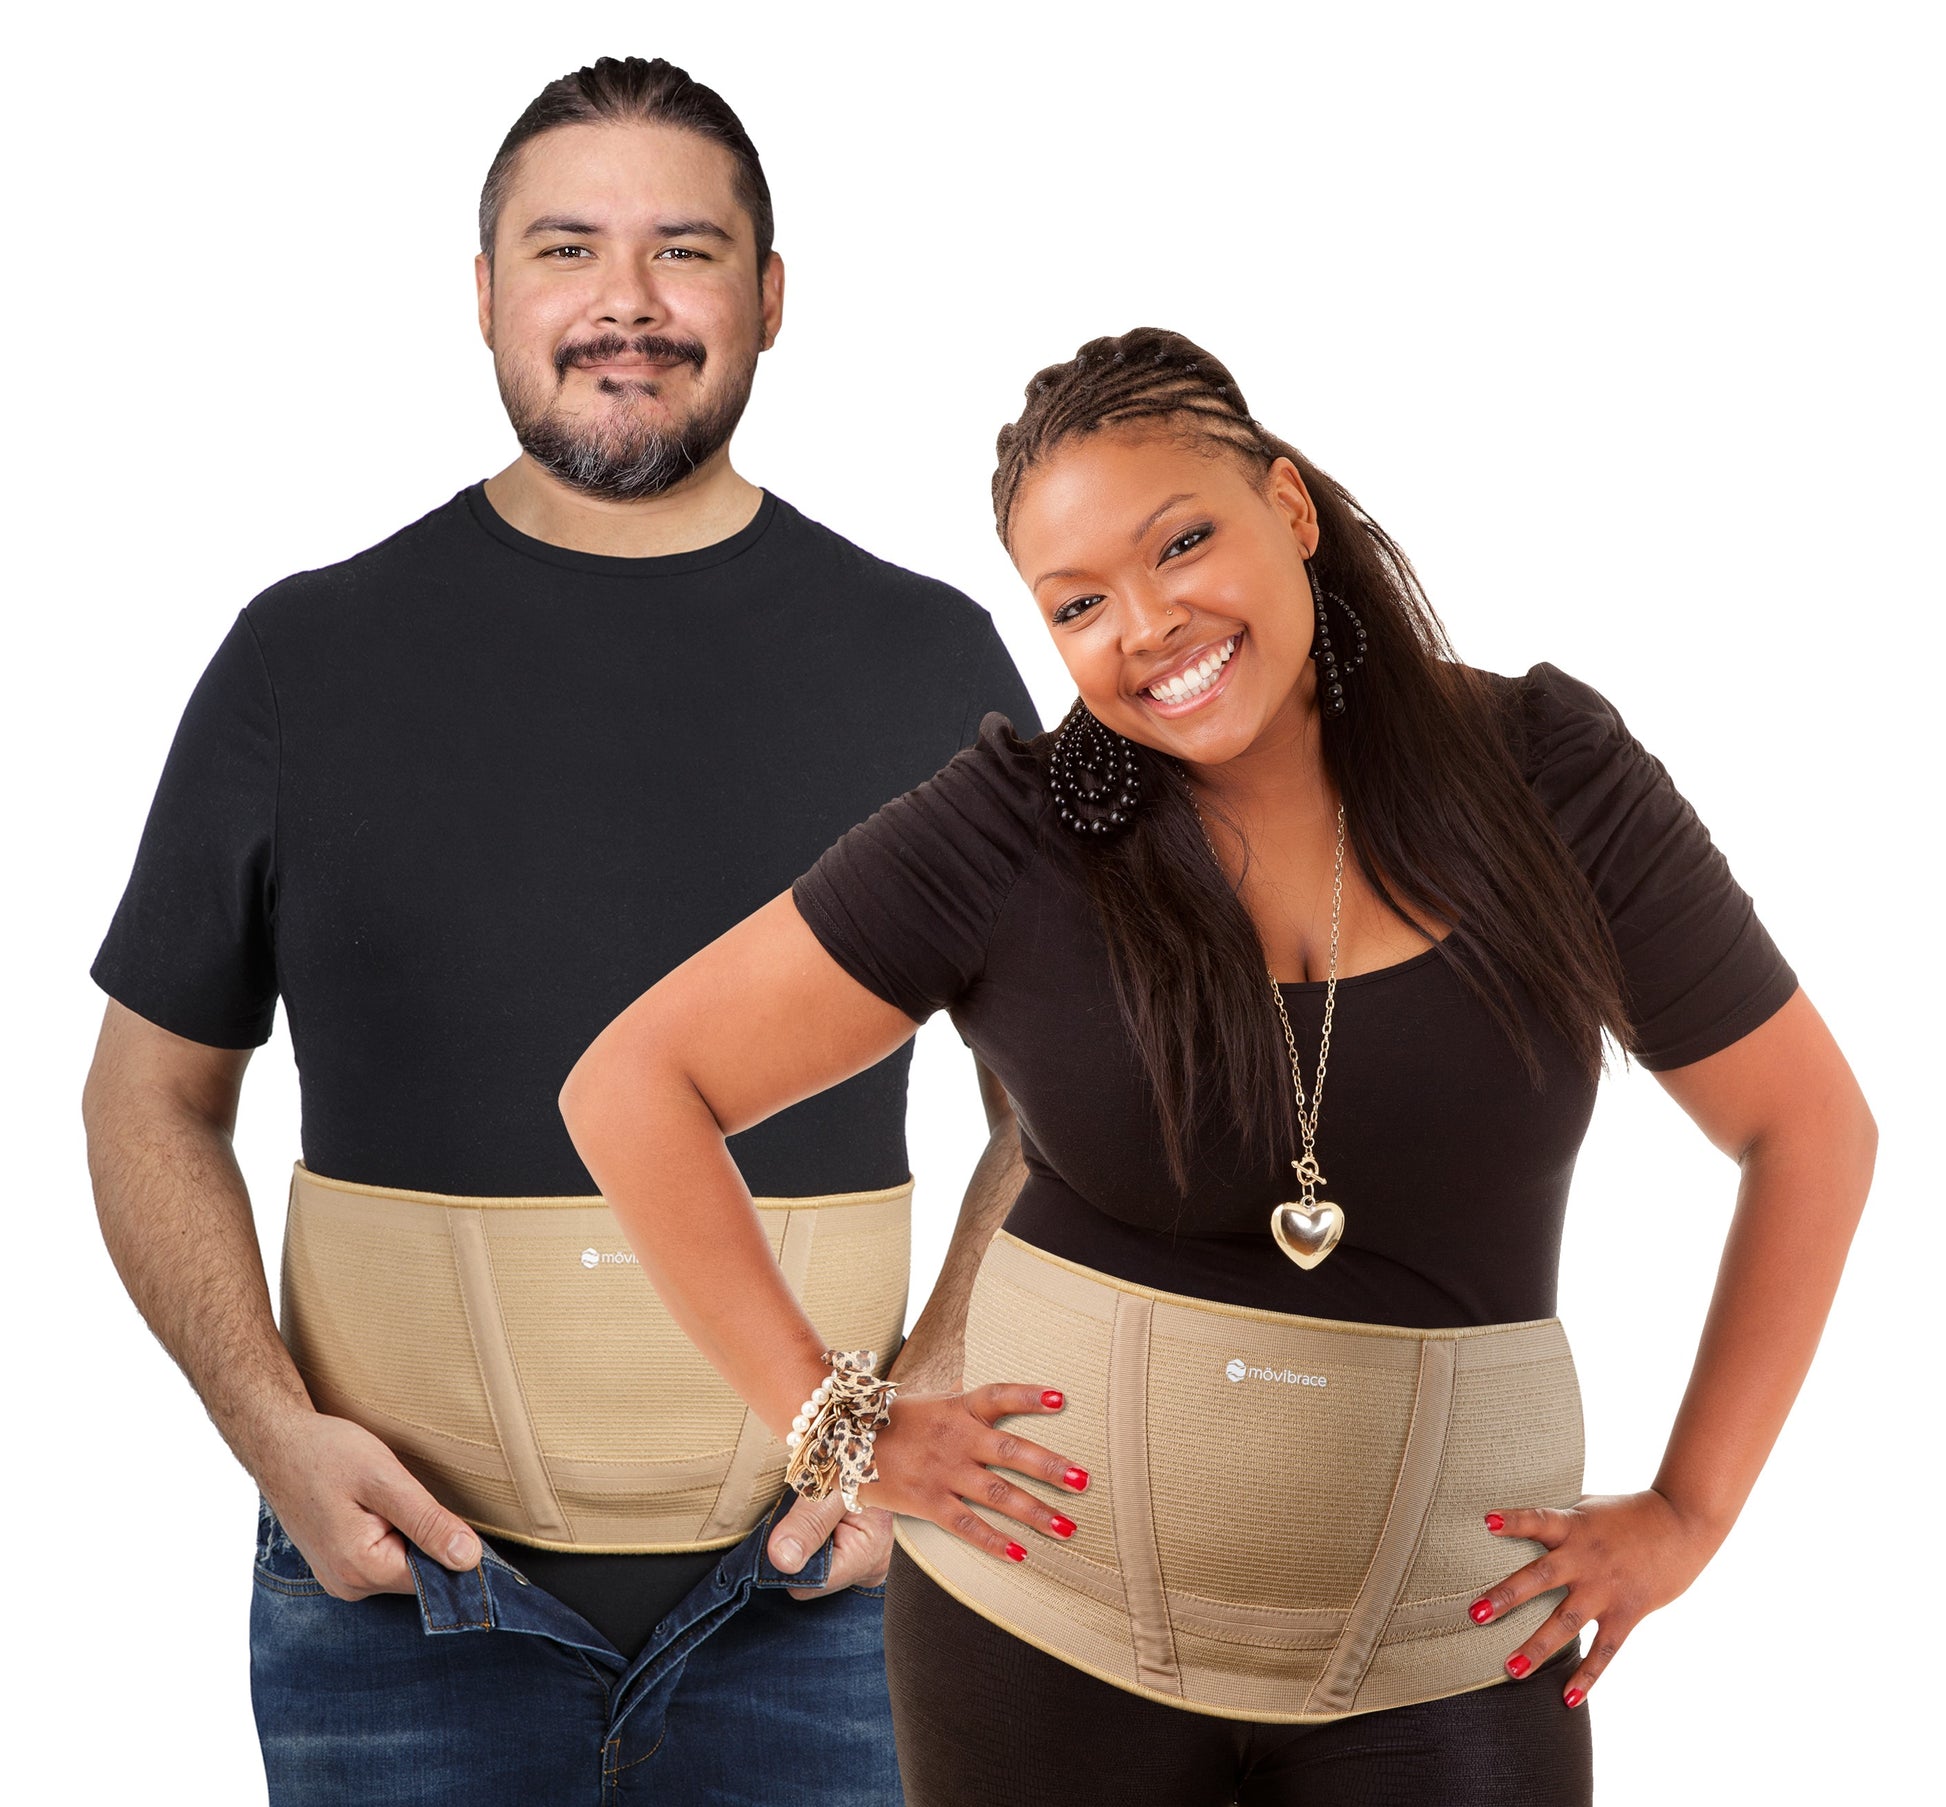 Obesity Belt Stomach Holder - Belly Support Band & Abdominal